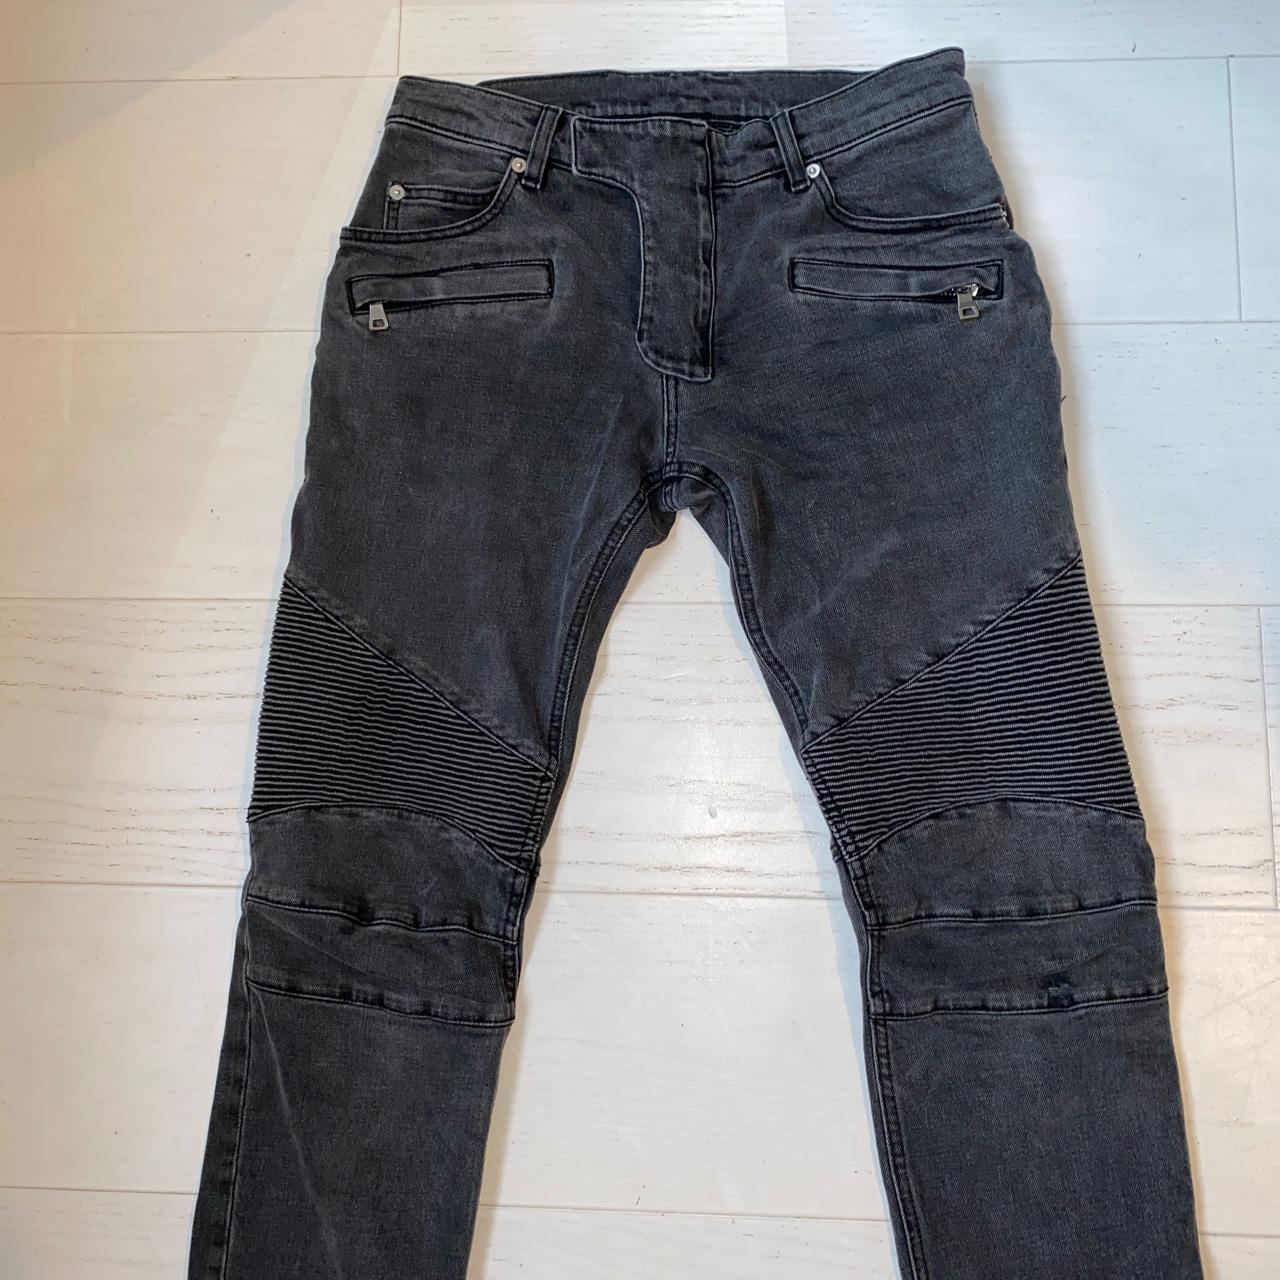 Balmain Jeans in excellent condition - Depop